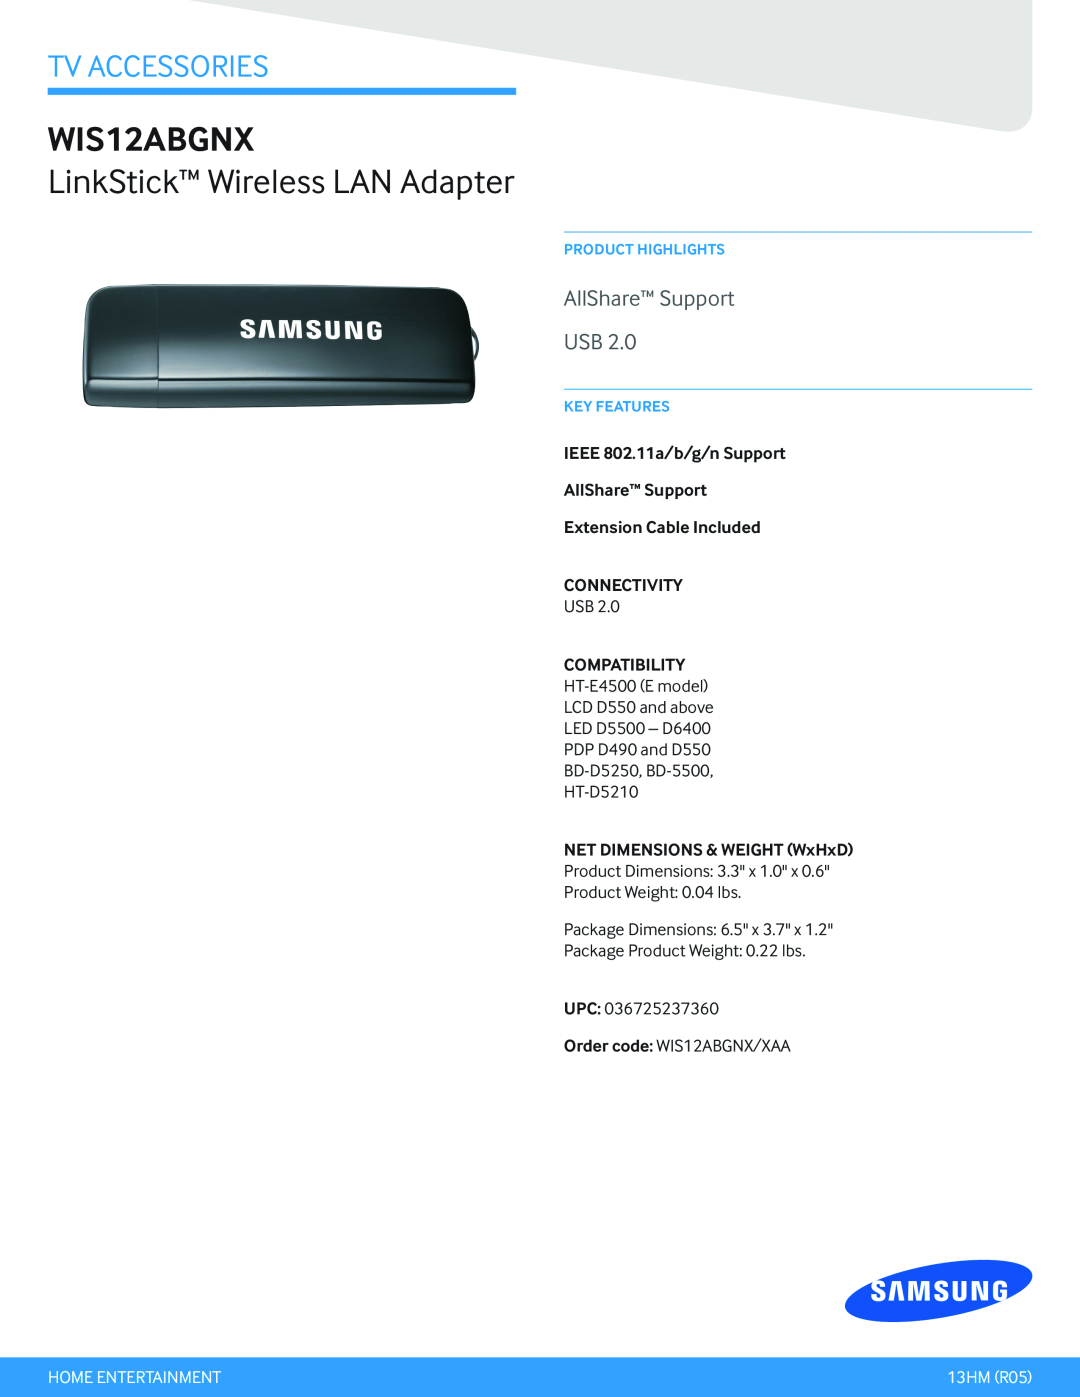 Samsung WIS12ABGNX dimensions LinkStick Wireless LAN Adapter, Tv Accessories, AllShare Support USB, Connectivity, 13HM R05 